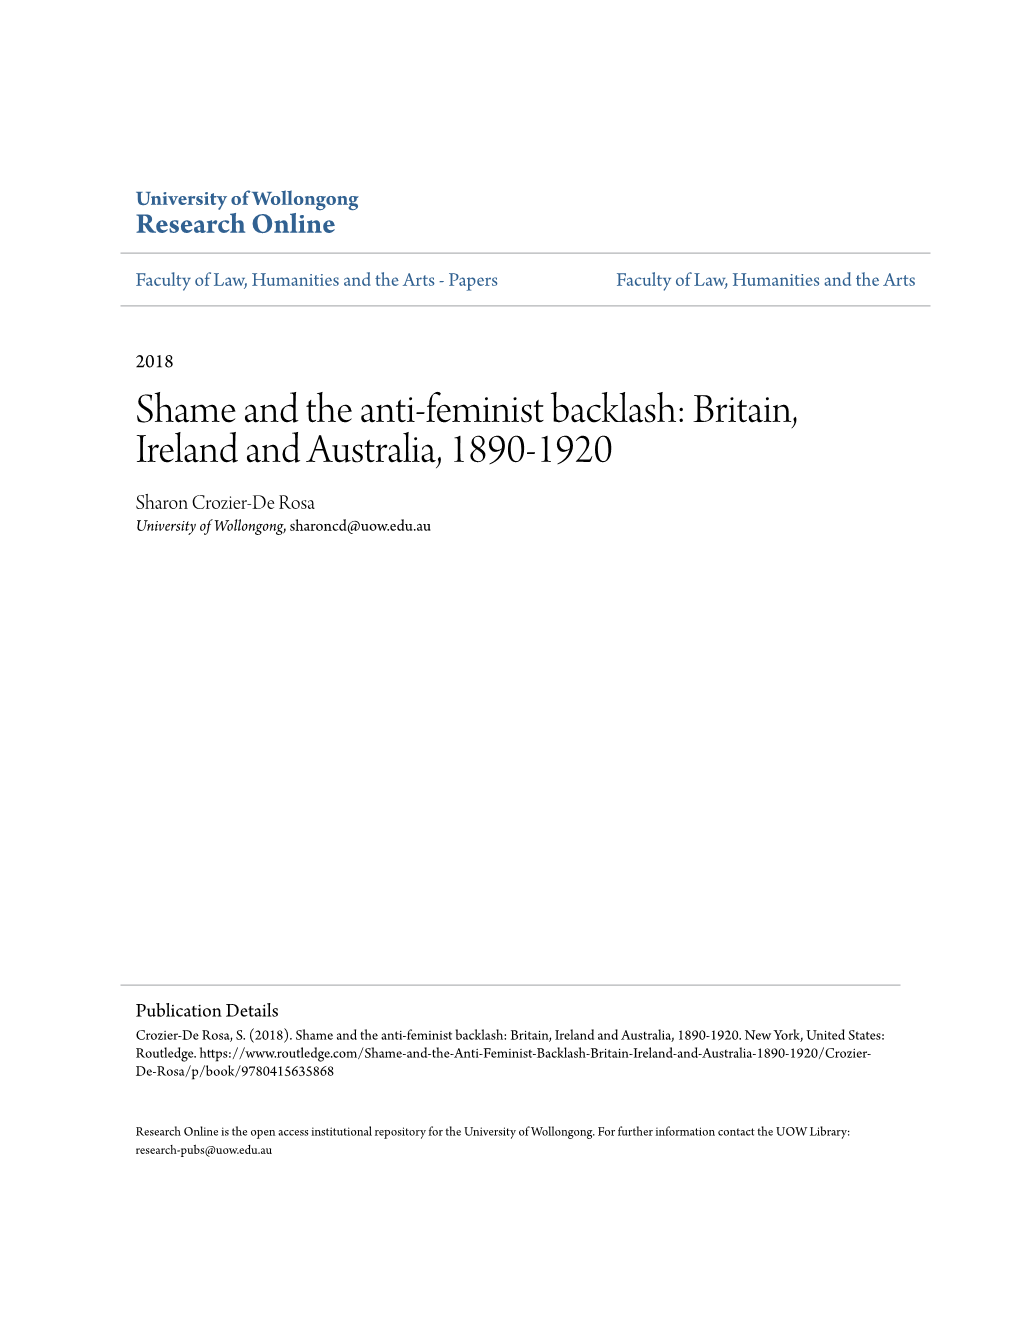 Shame and the Anti-Feminist Backlash: Britain, Ireland and Australia, 1890-1920 Sharon Crozier-De Rosa University of Wollongong, Sharoncd@Uow.Edu.Au